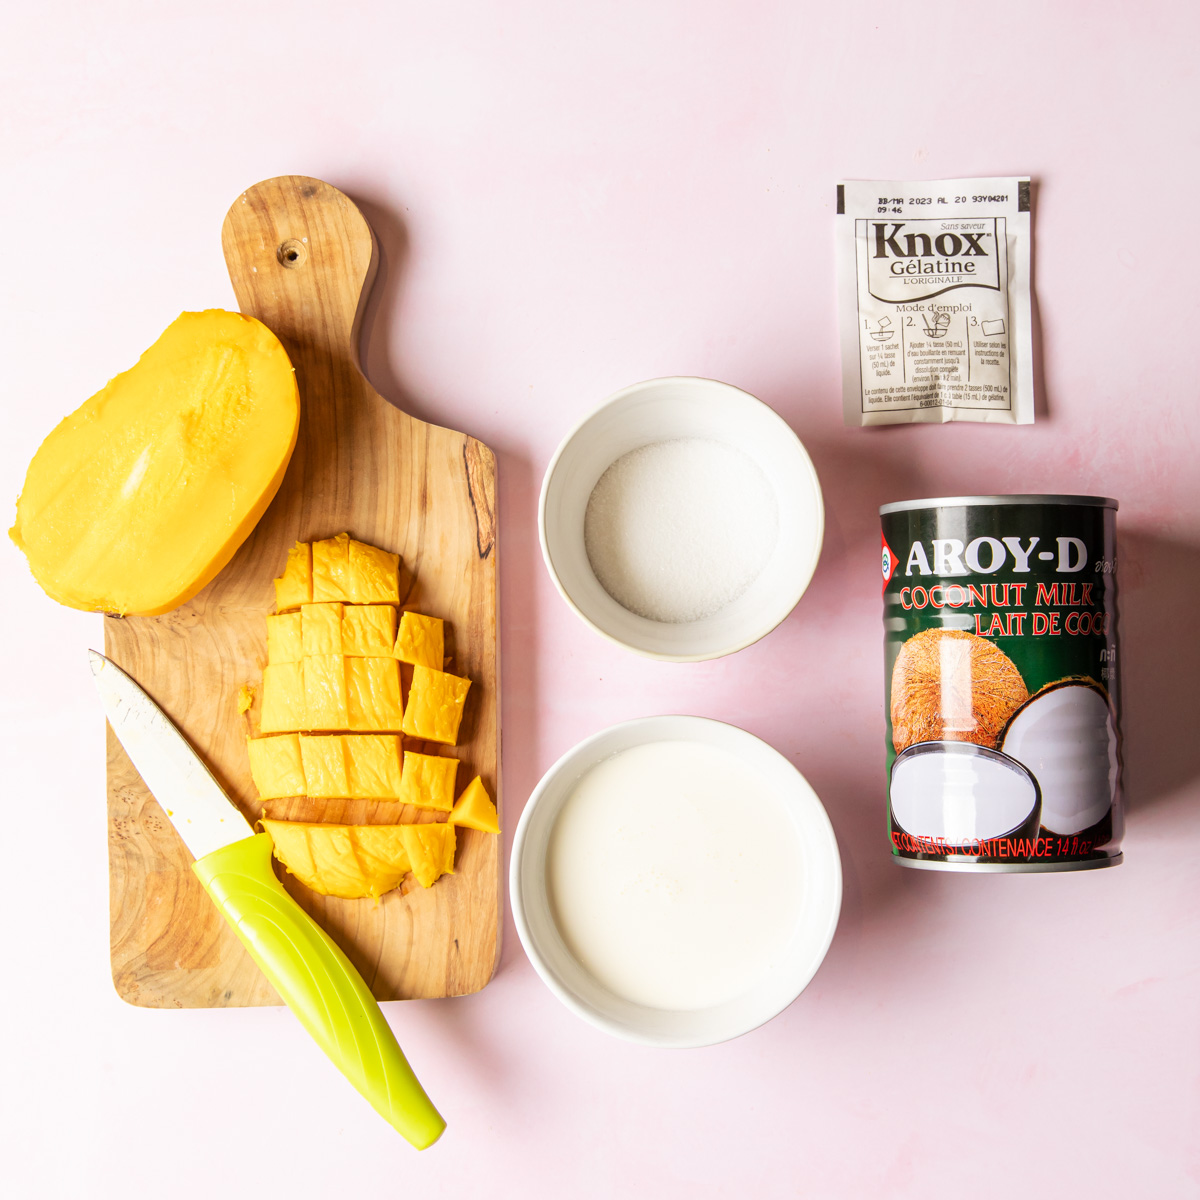 ingredients needed to make mango panna cotta